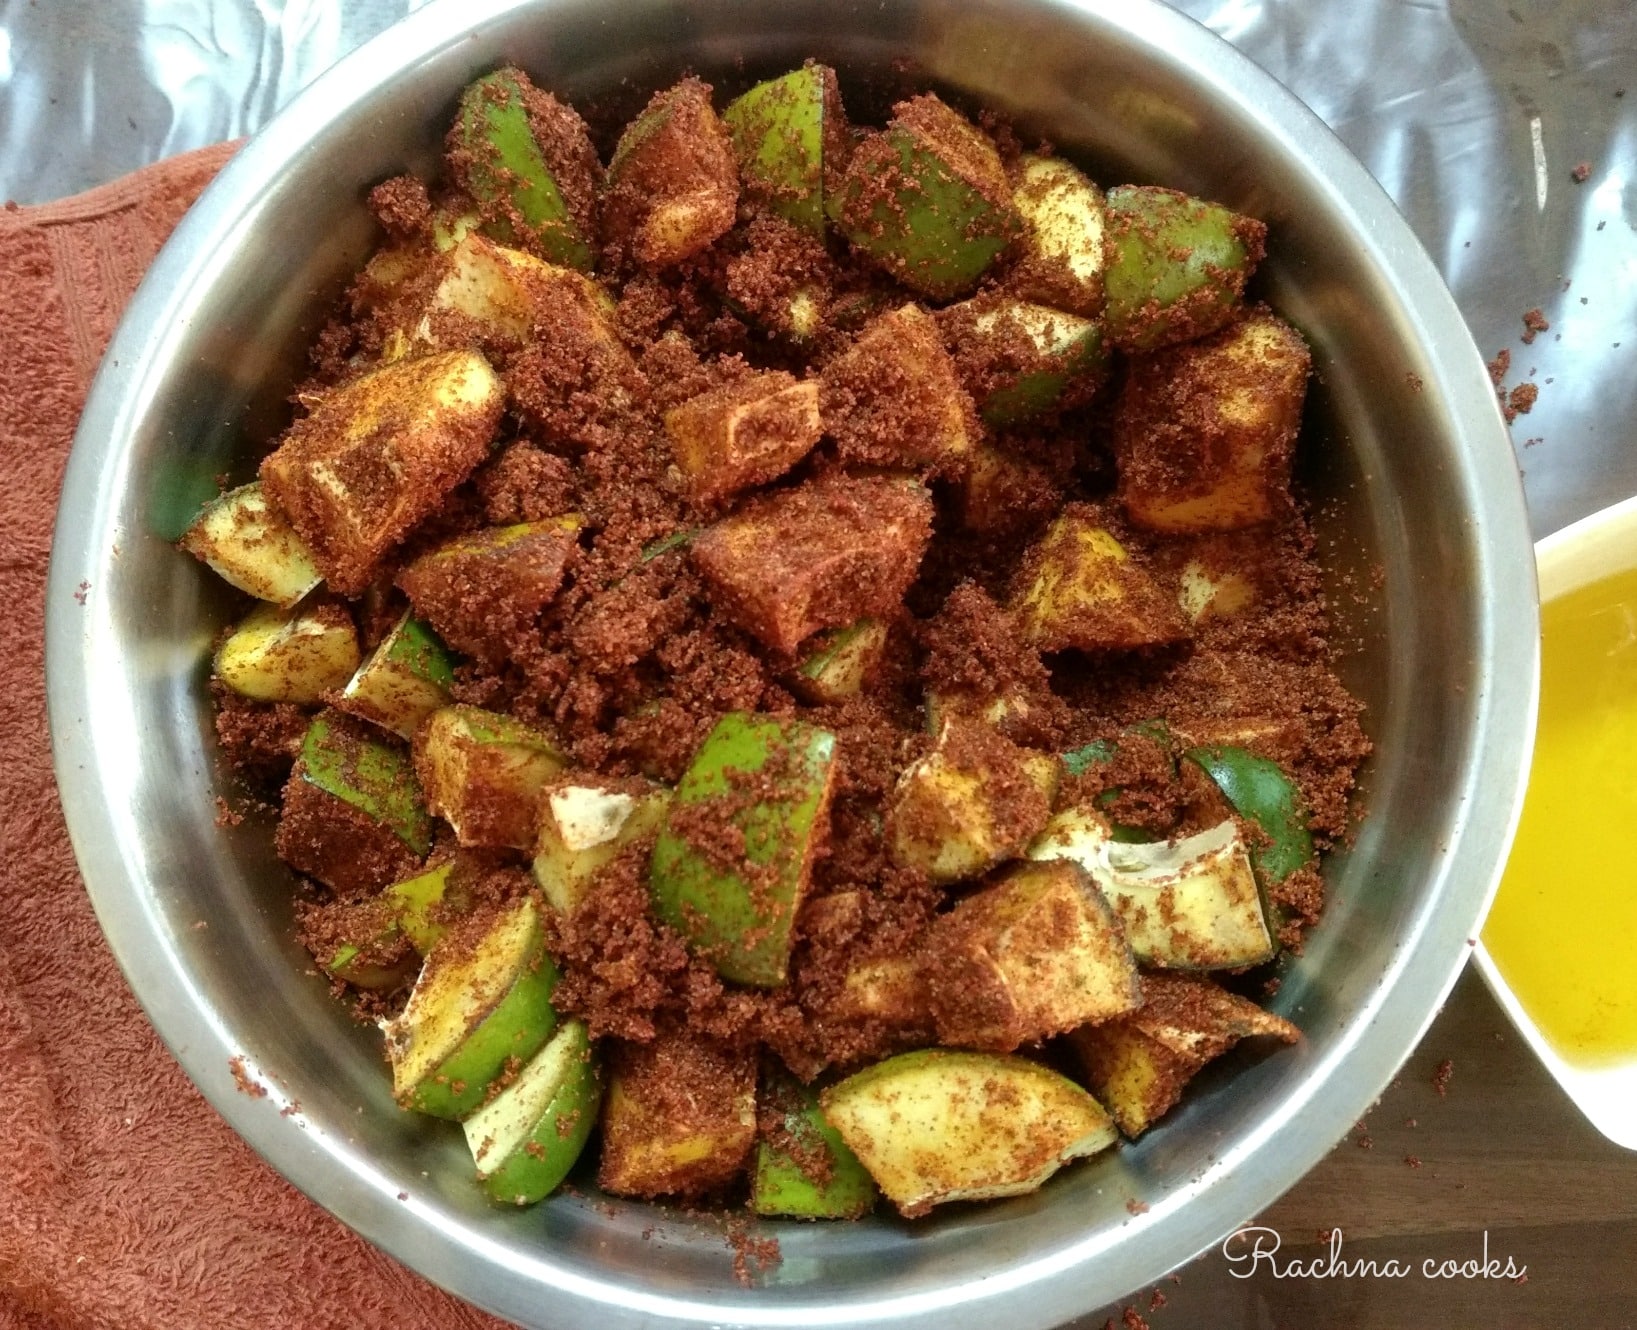 Receta de encurtidos de mango picantes estilo Andhra | Receta Avakaya (paso a paso)